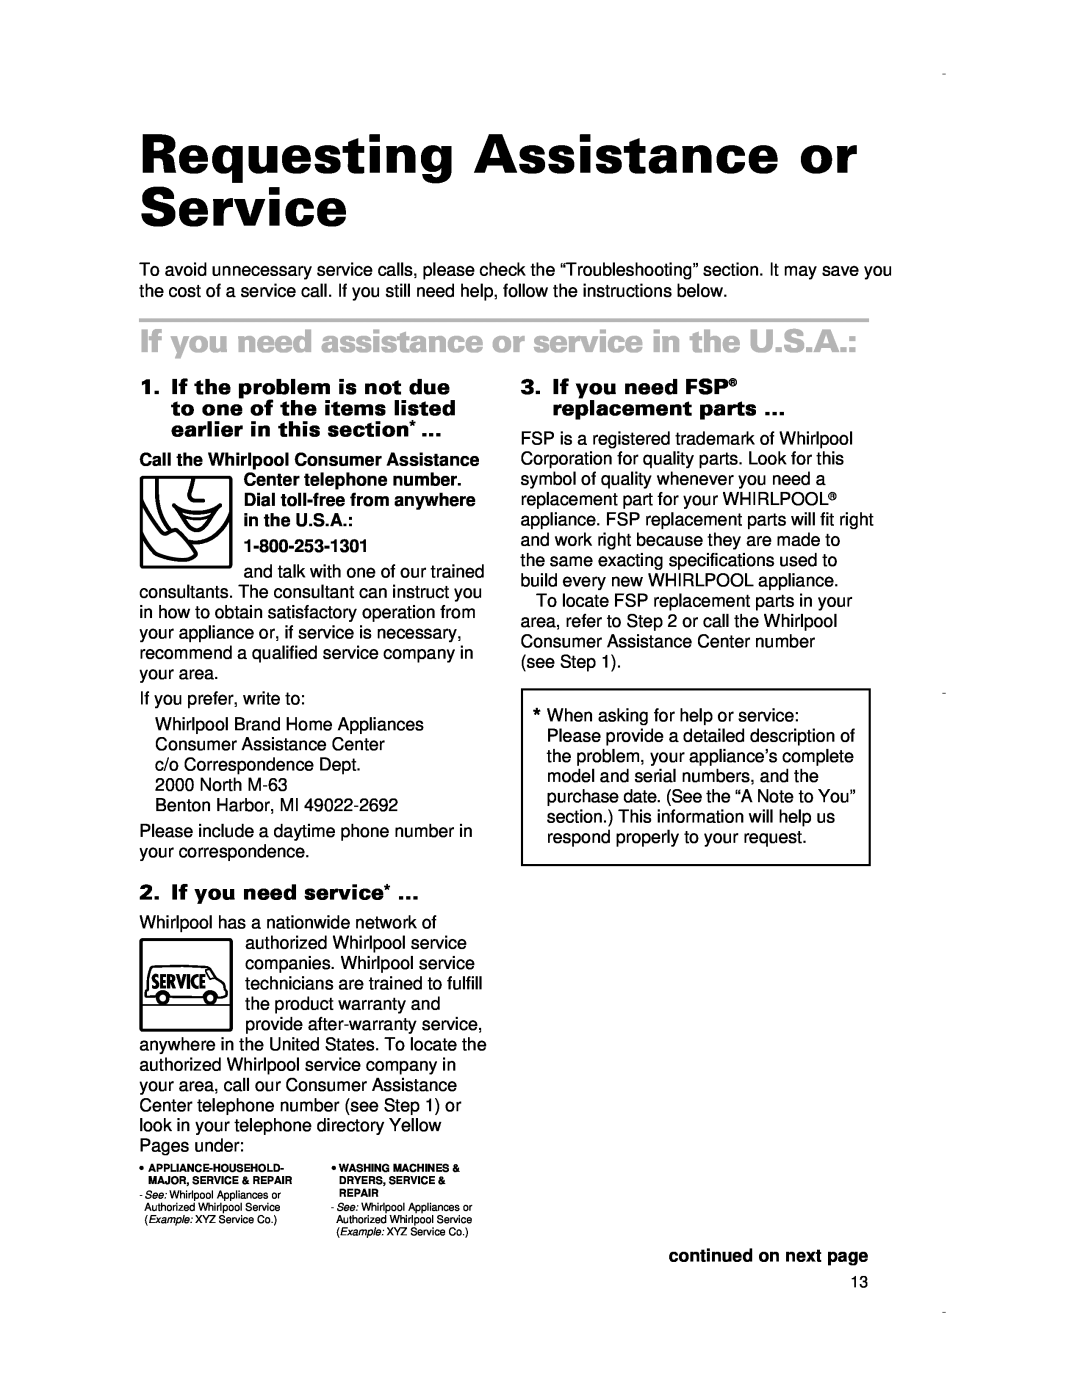 Whirlpool RCS3014G, RCS3614G, RCS2012G Requesting Assistance or Service, If you need assistance or service in the U.S.A 